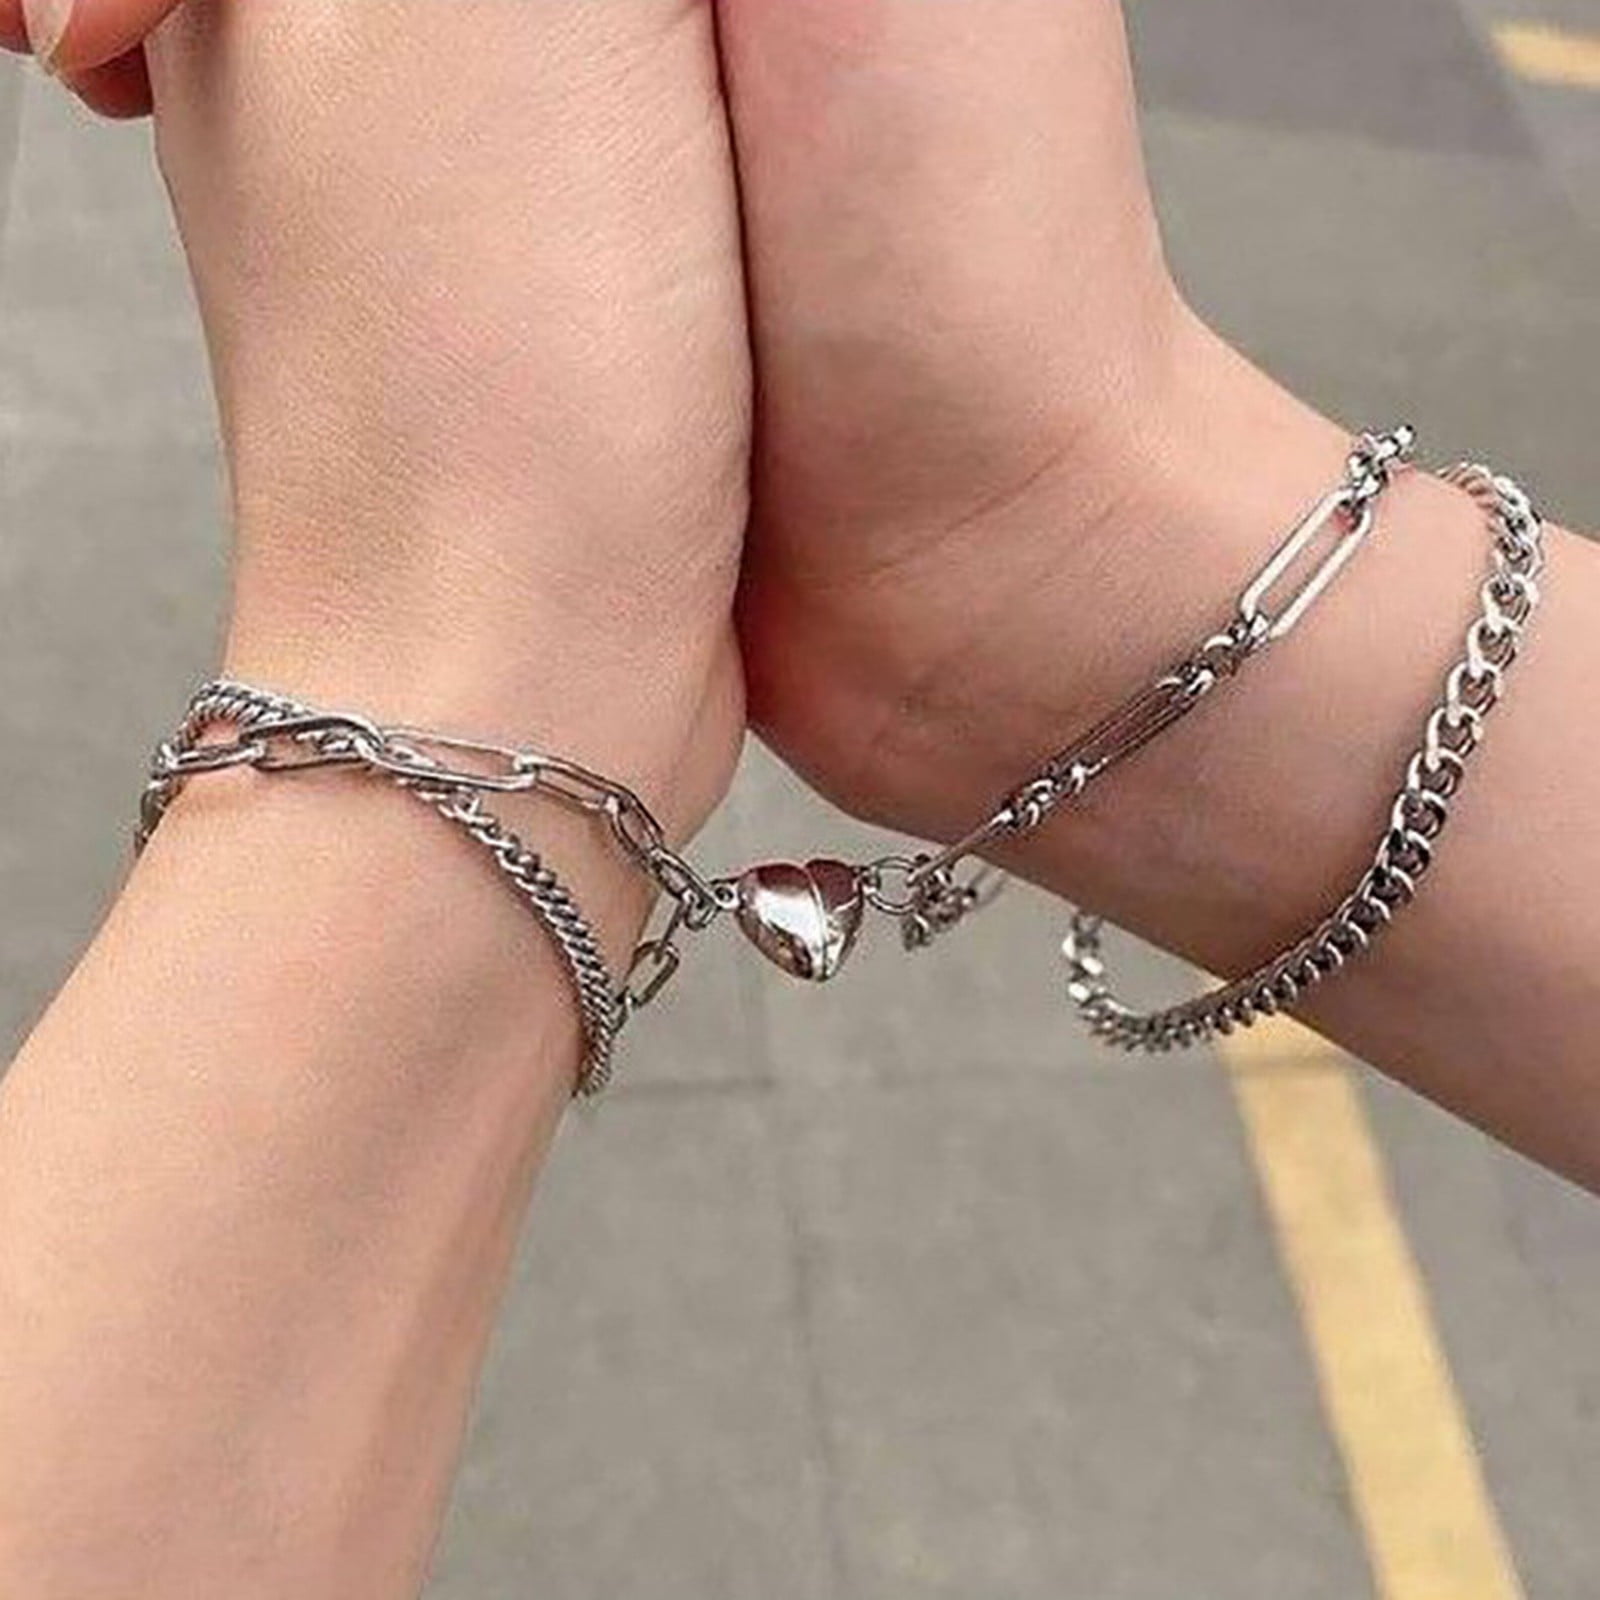 liforlove 2Pcs Heart Magnetic Bracelet Couples Bracelets Vows of Eternal  Love Jewelry Gift Rubber Rope Relationship Bracelet Friendship Matching